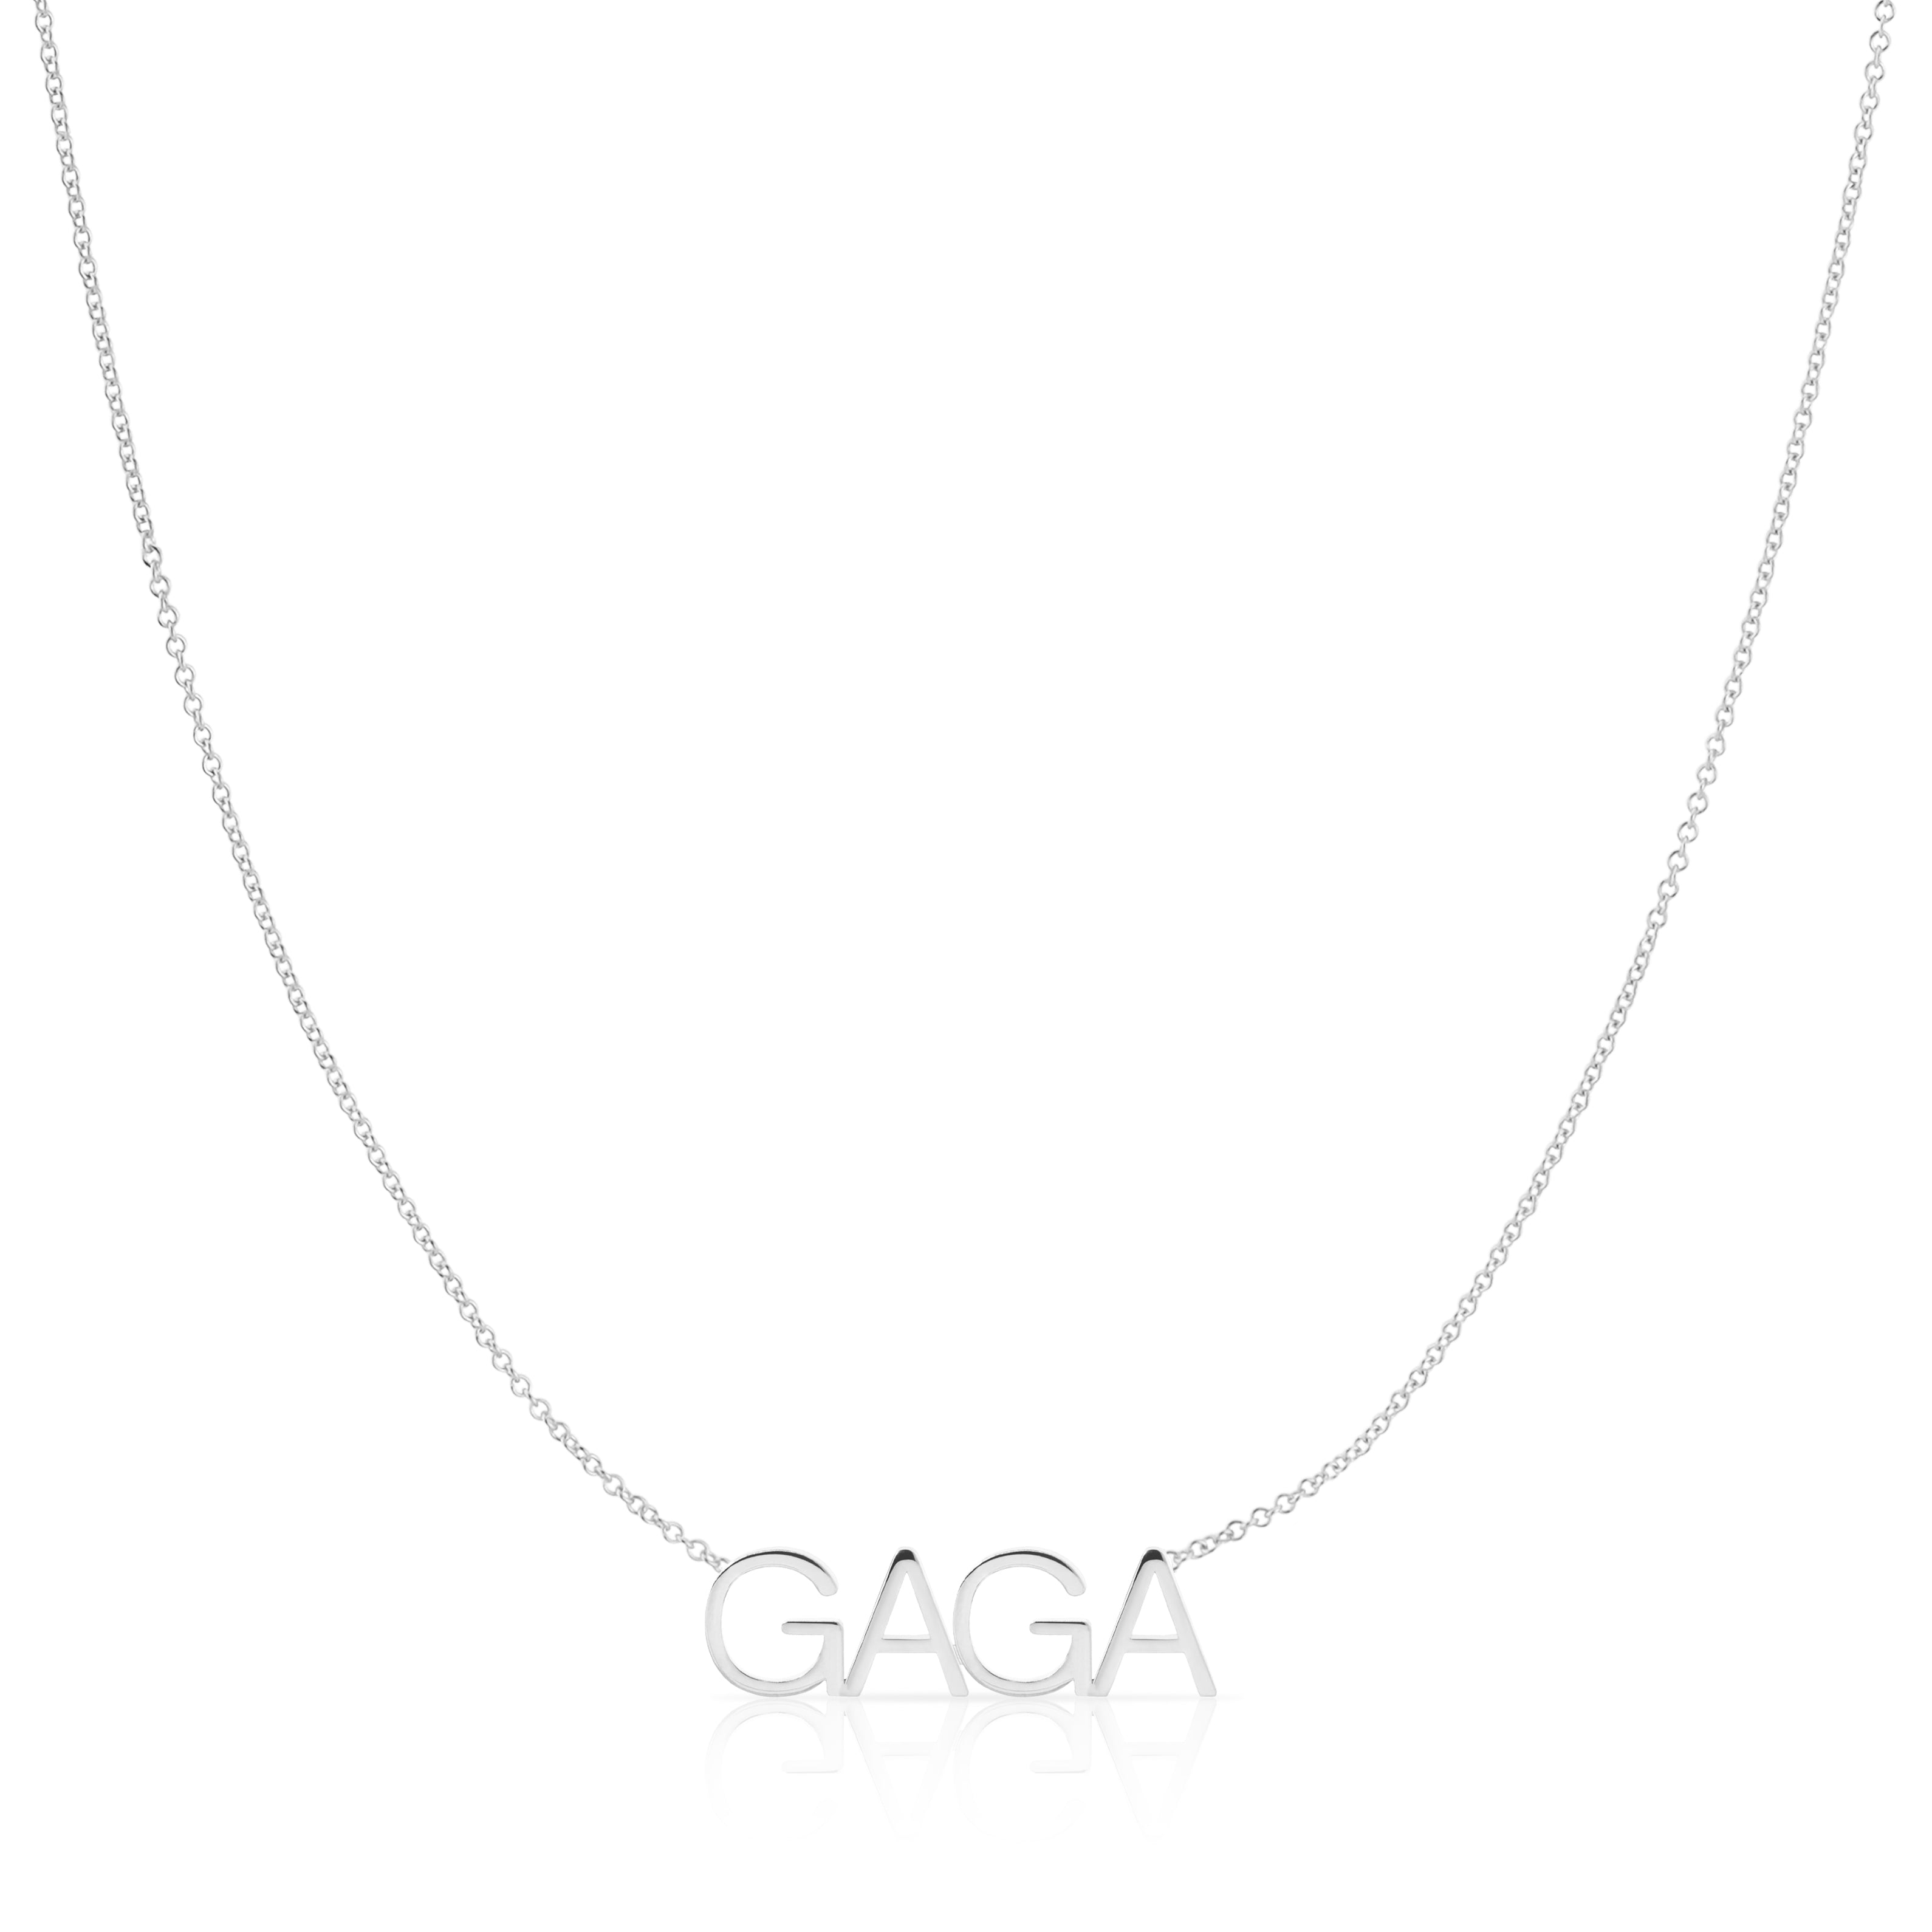 GAGA Necklace